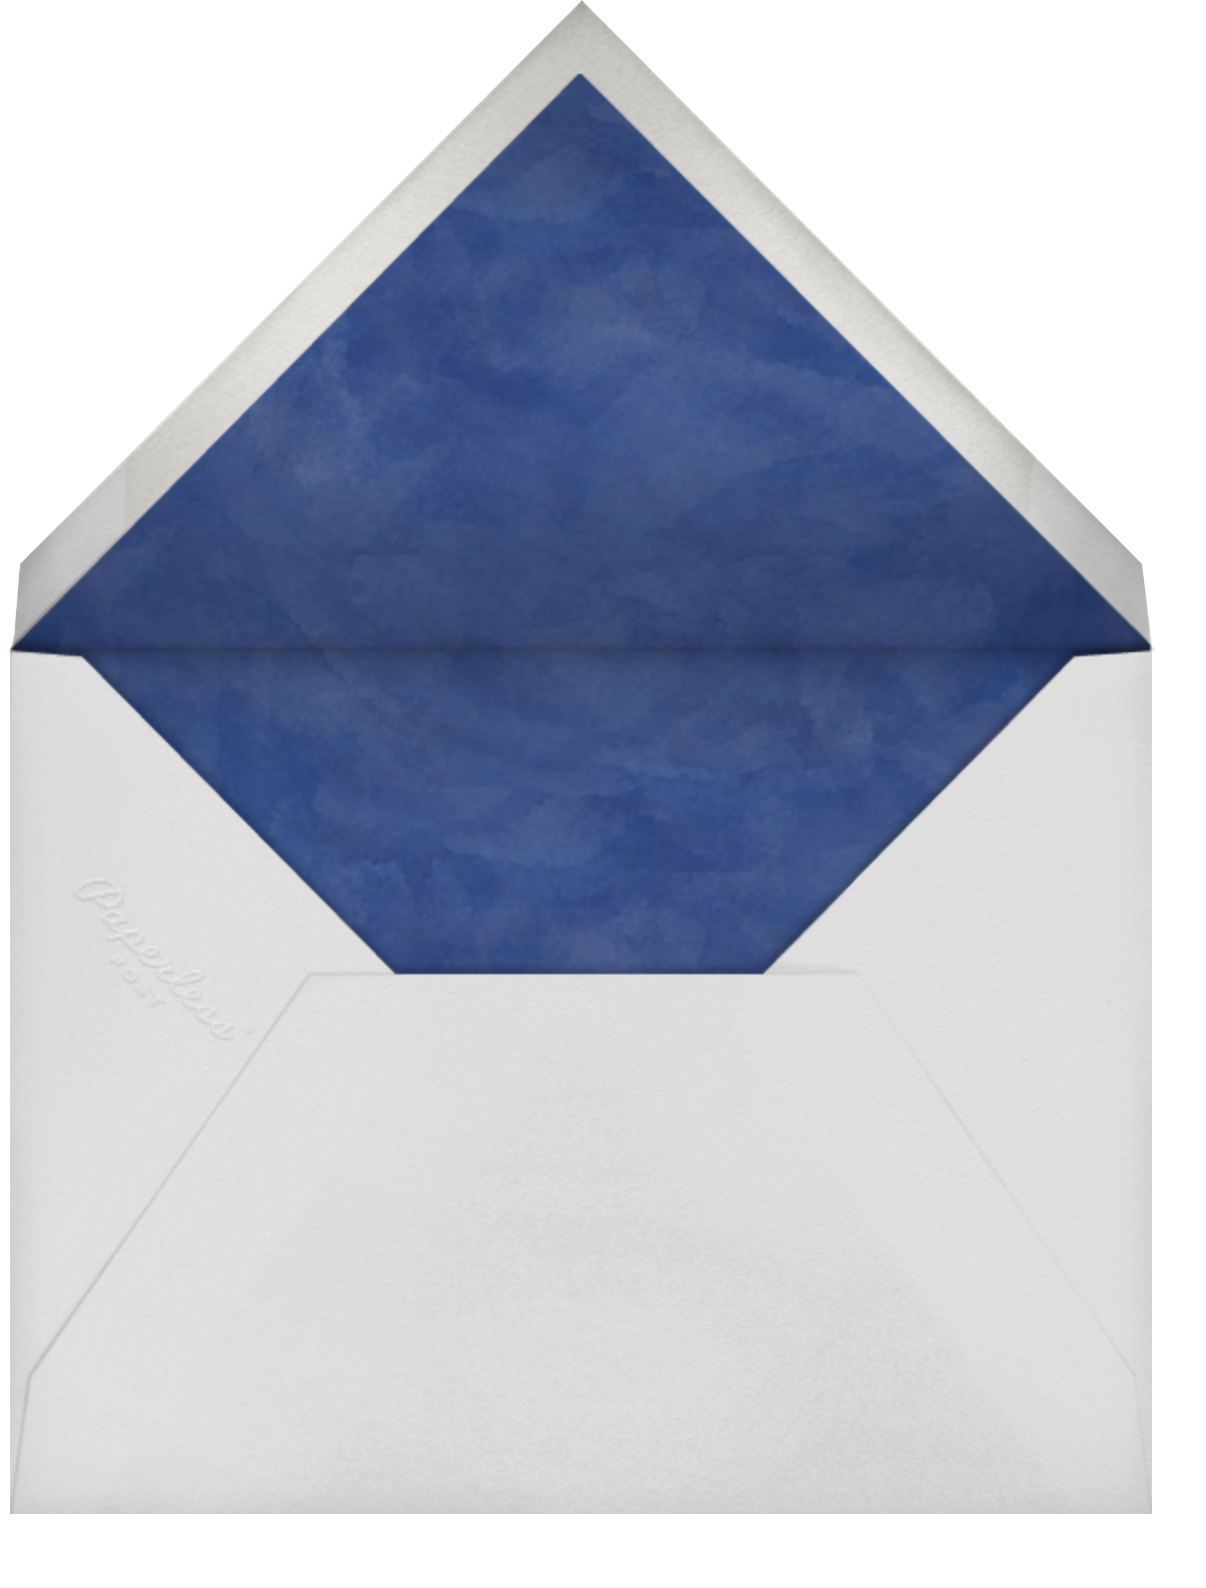 Floral Trellis II - Blue/Gold - Oscar de la Renta - Envelope